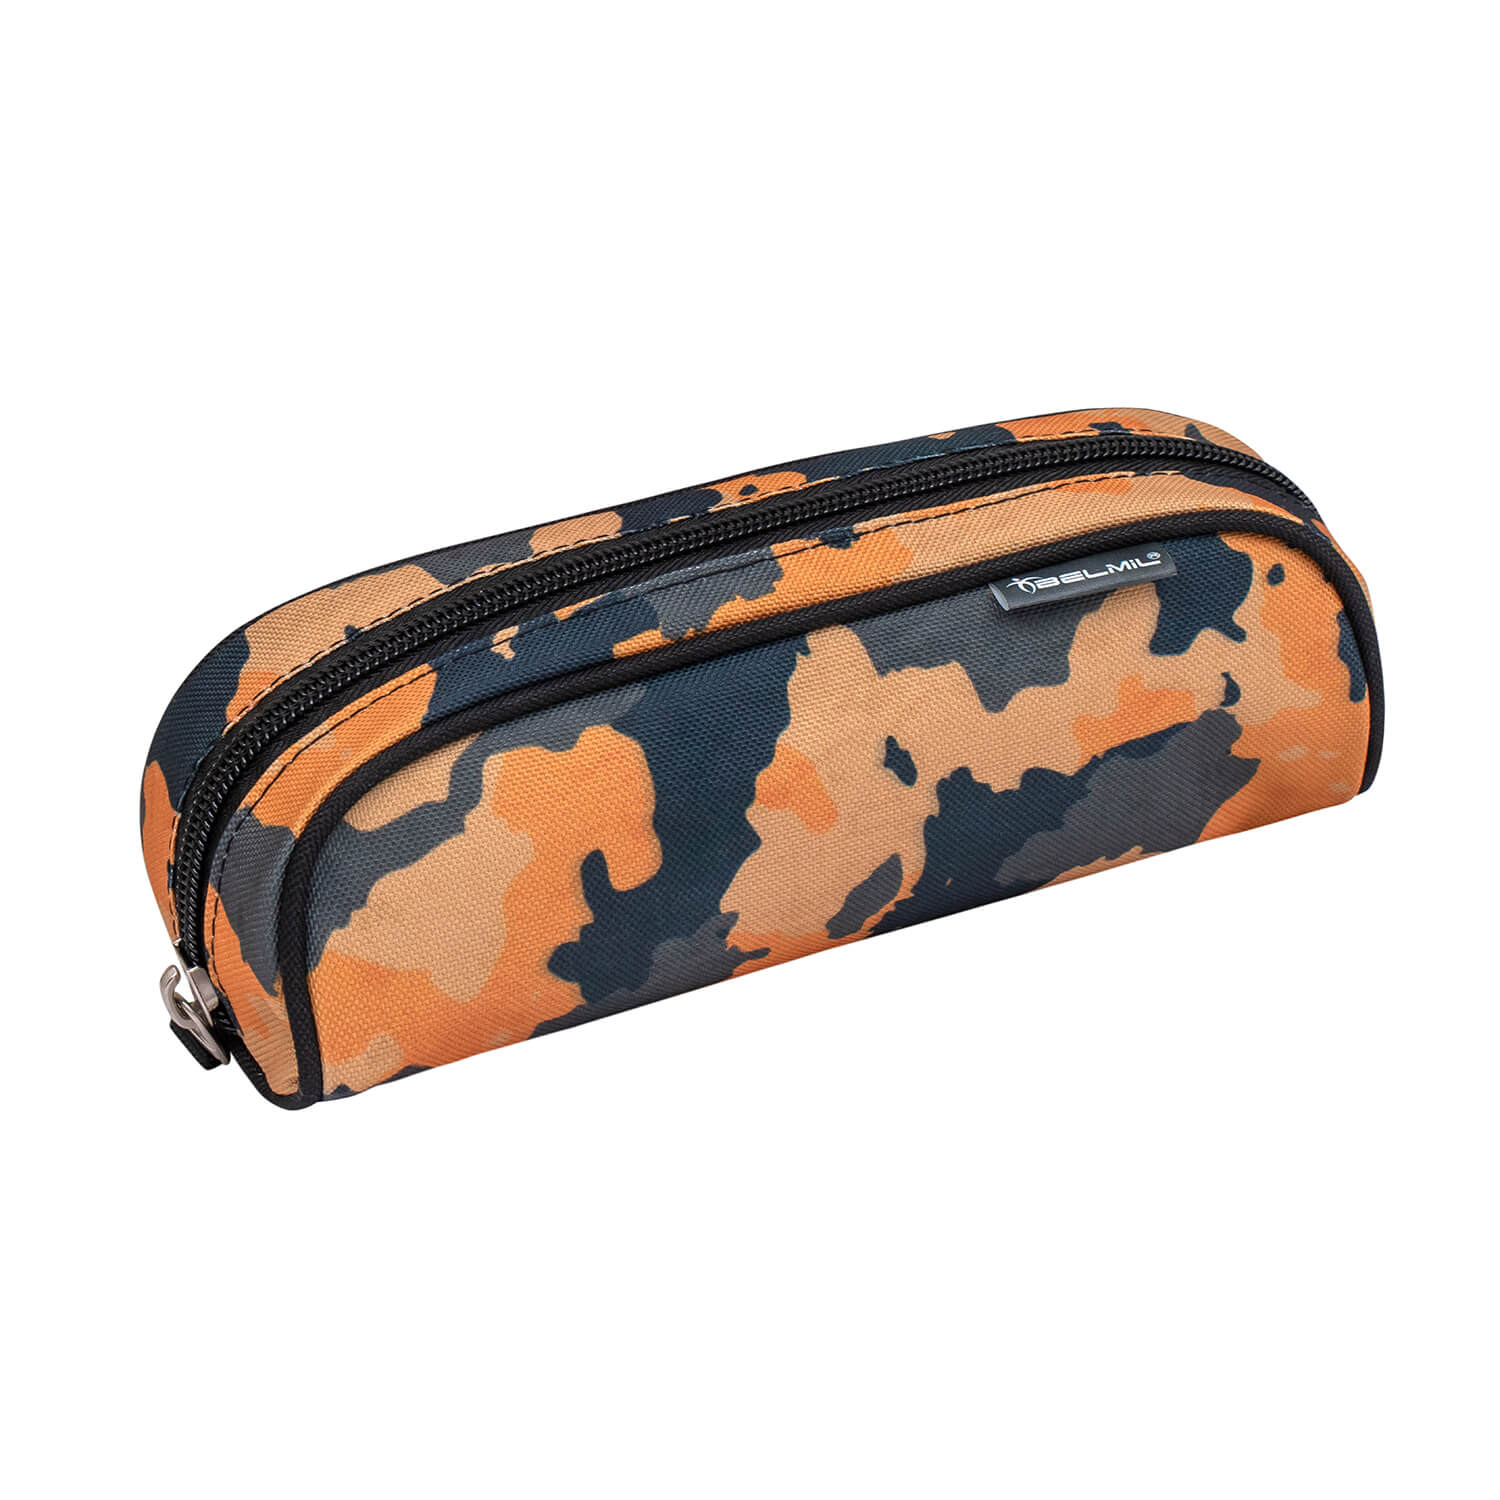 Smarty Orange Camouflage schoolbag set 5 pcs